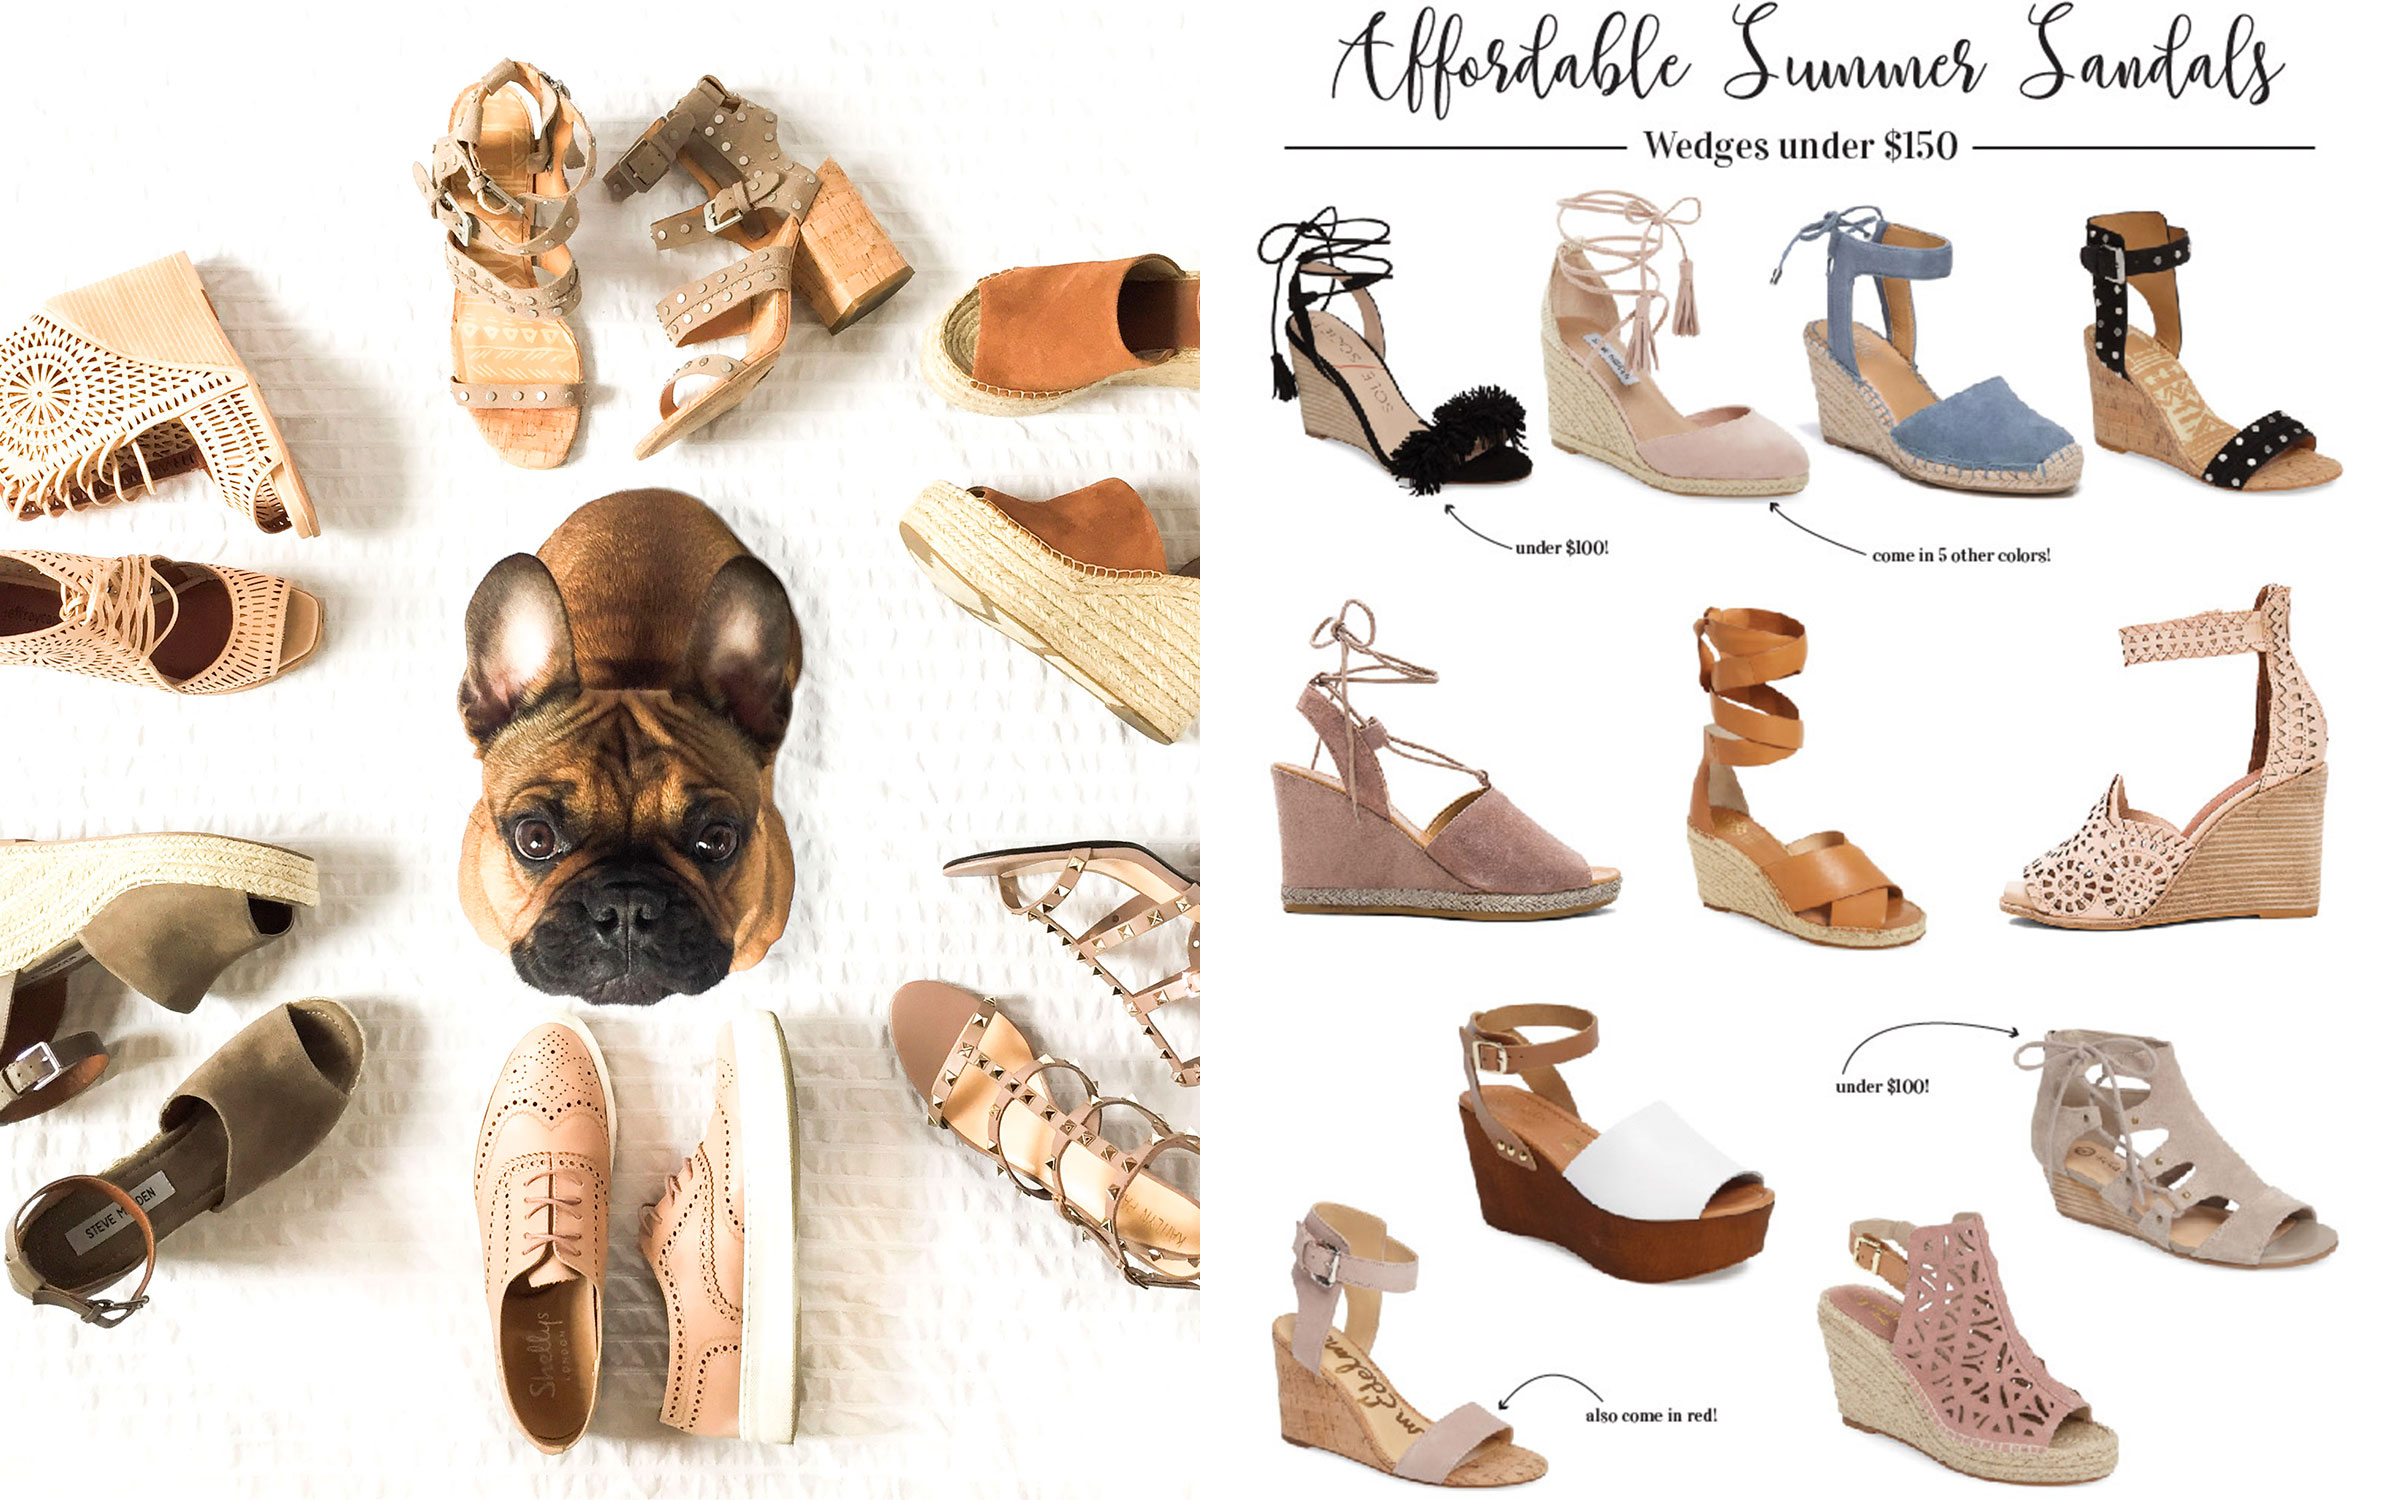 inexpensive summer sandals